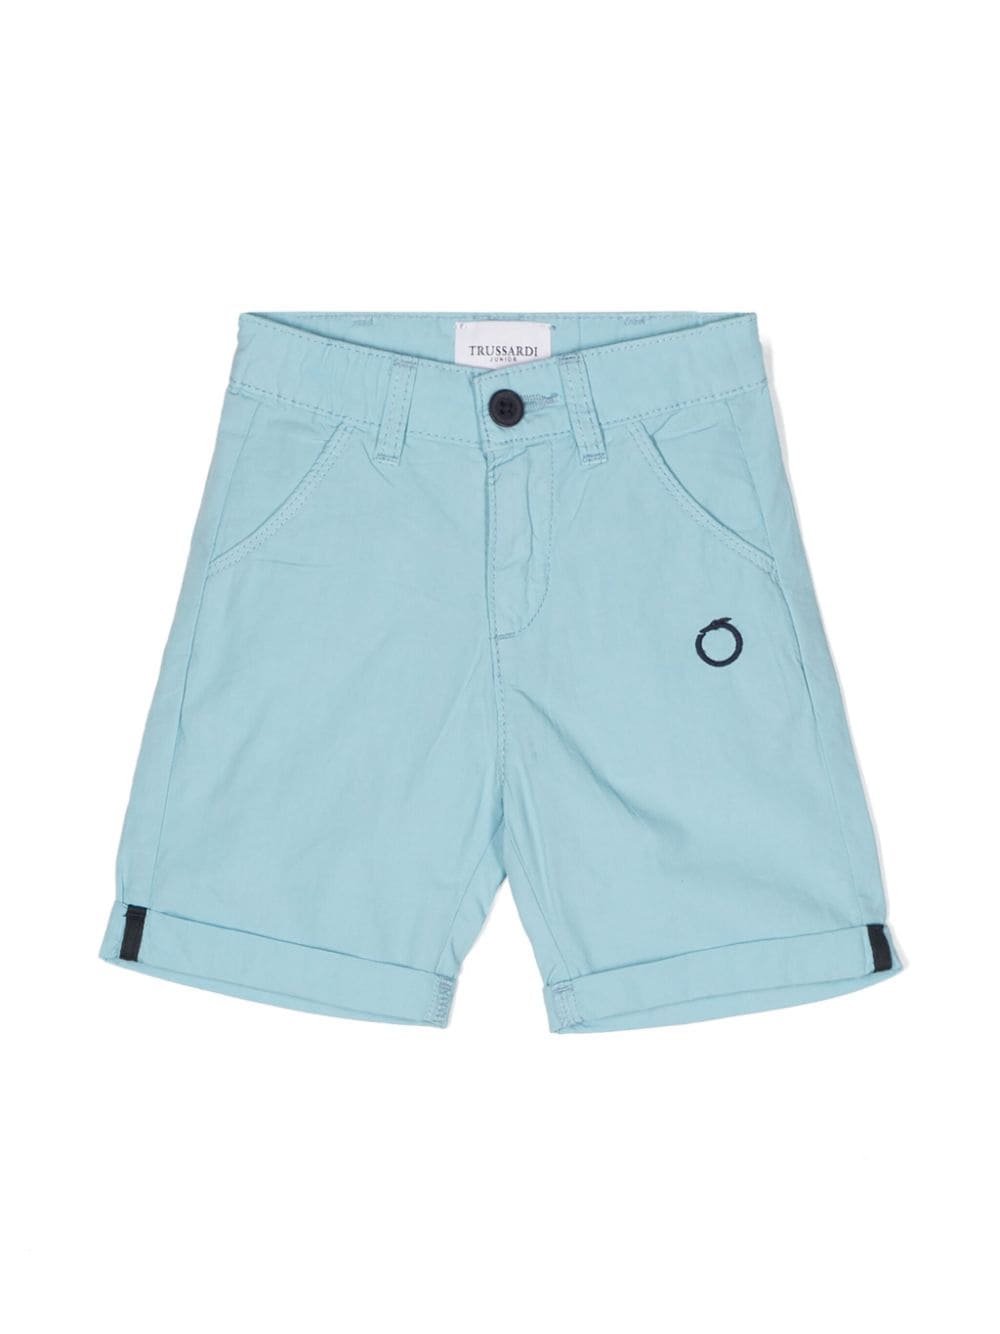 Light blue Bermuda shorts for newborns with logo